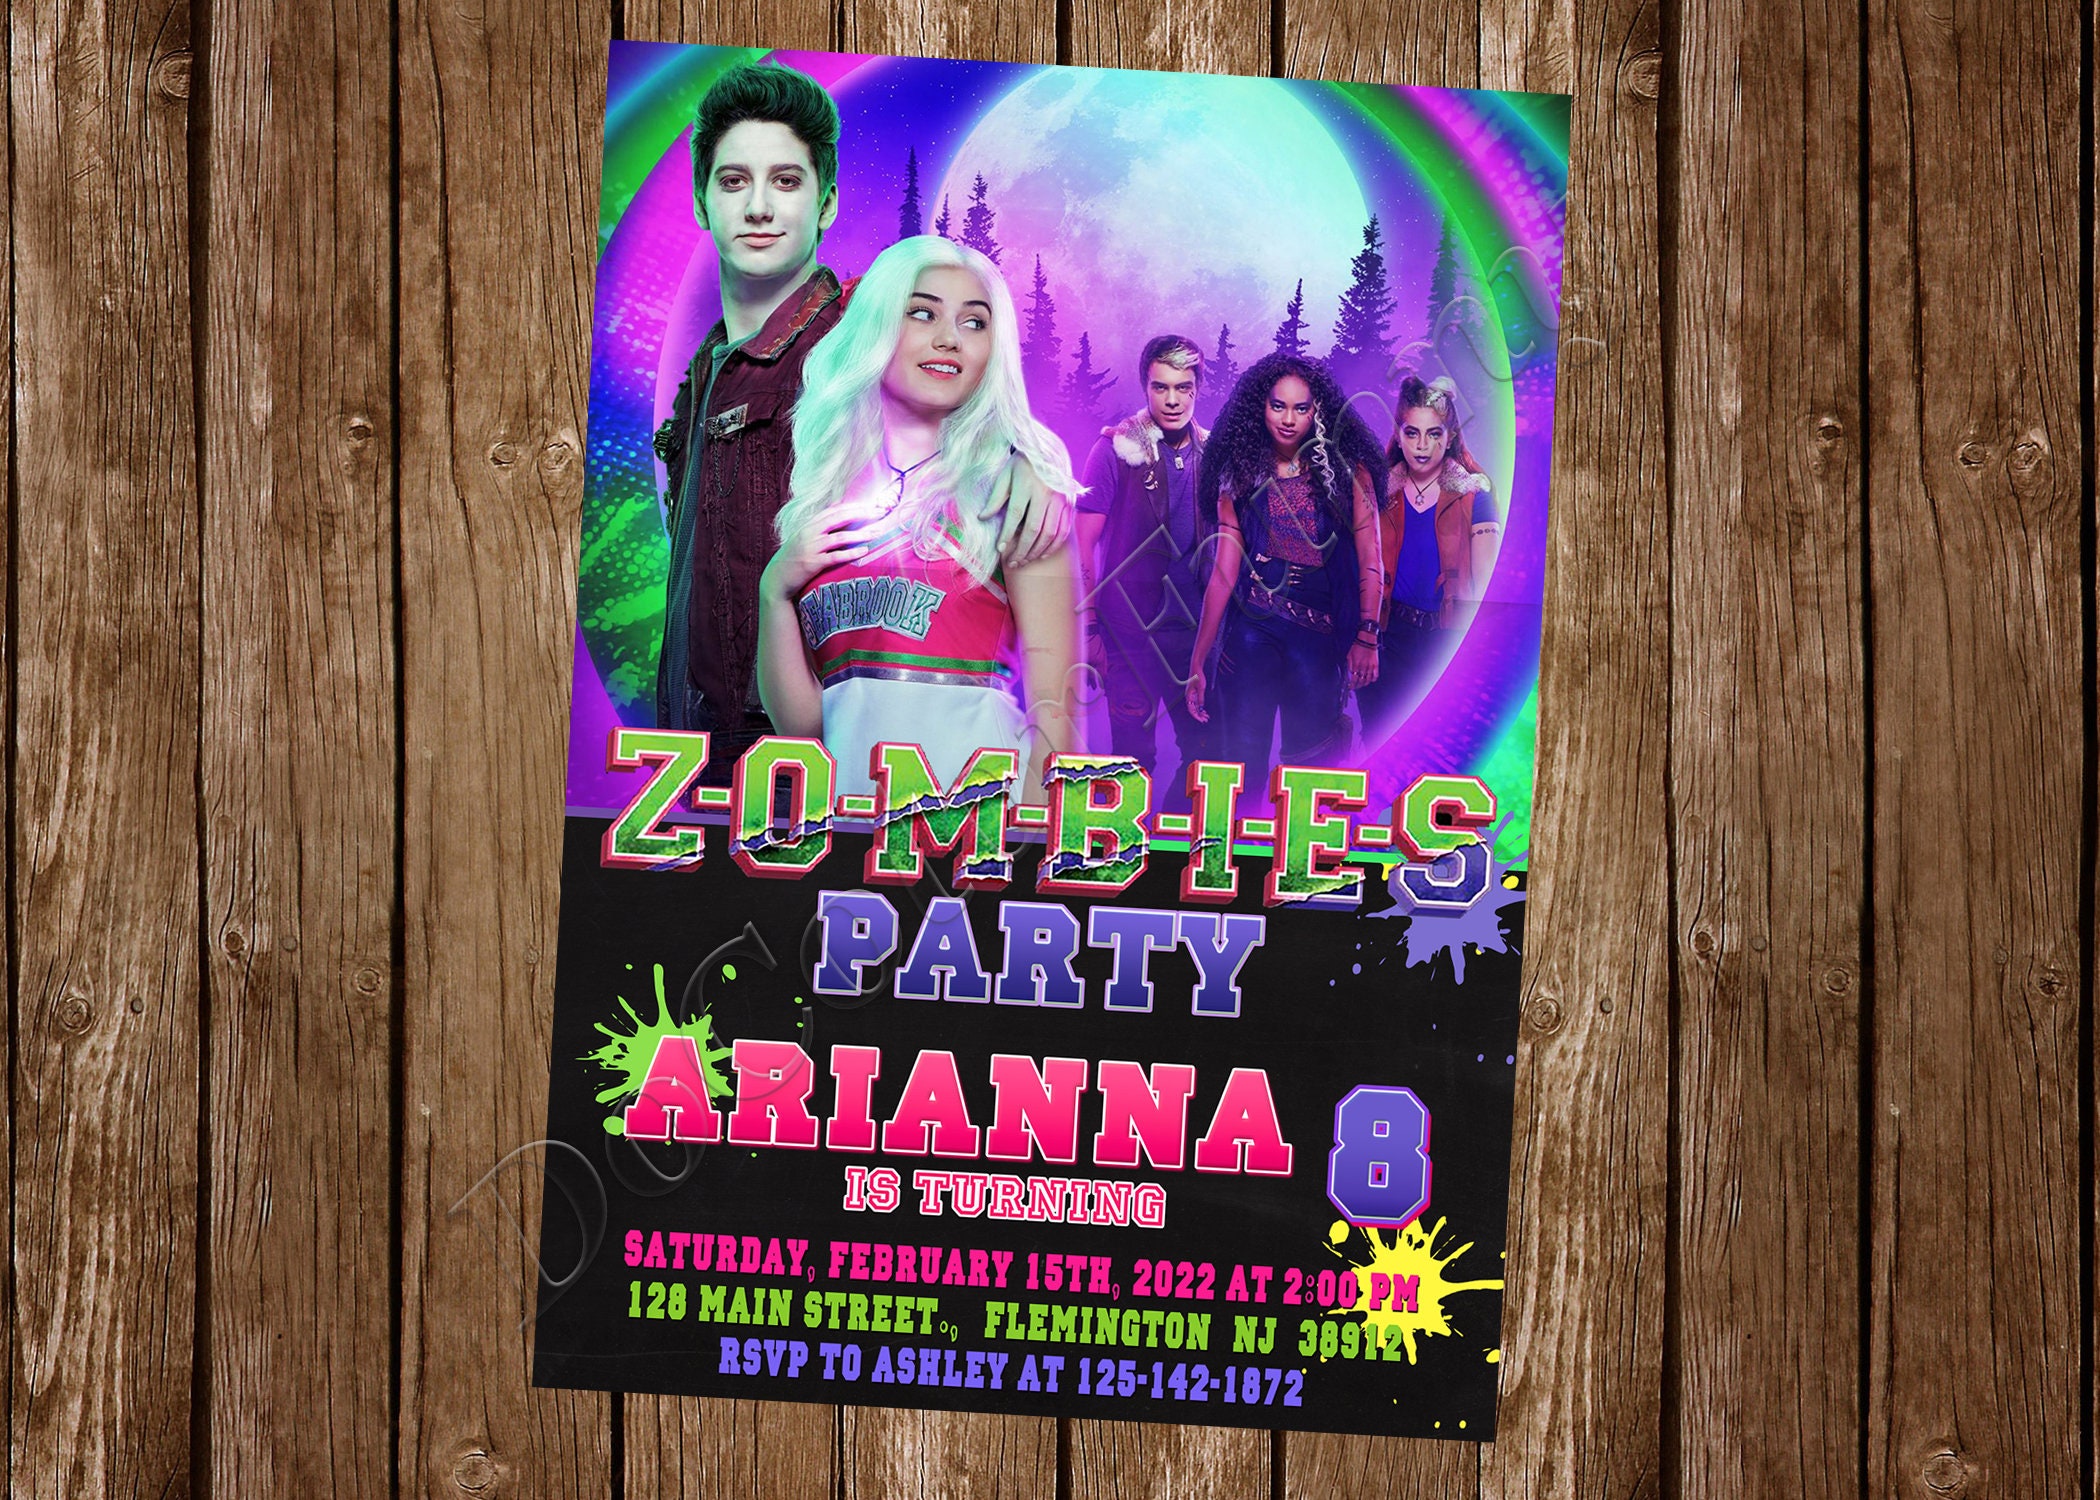 Free Printable Disney Zombies Birthday Party Invitations